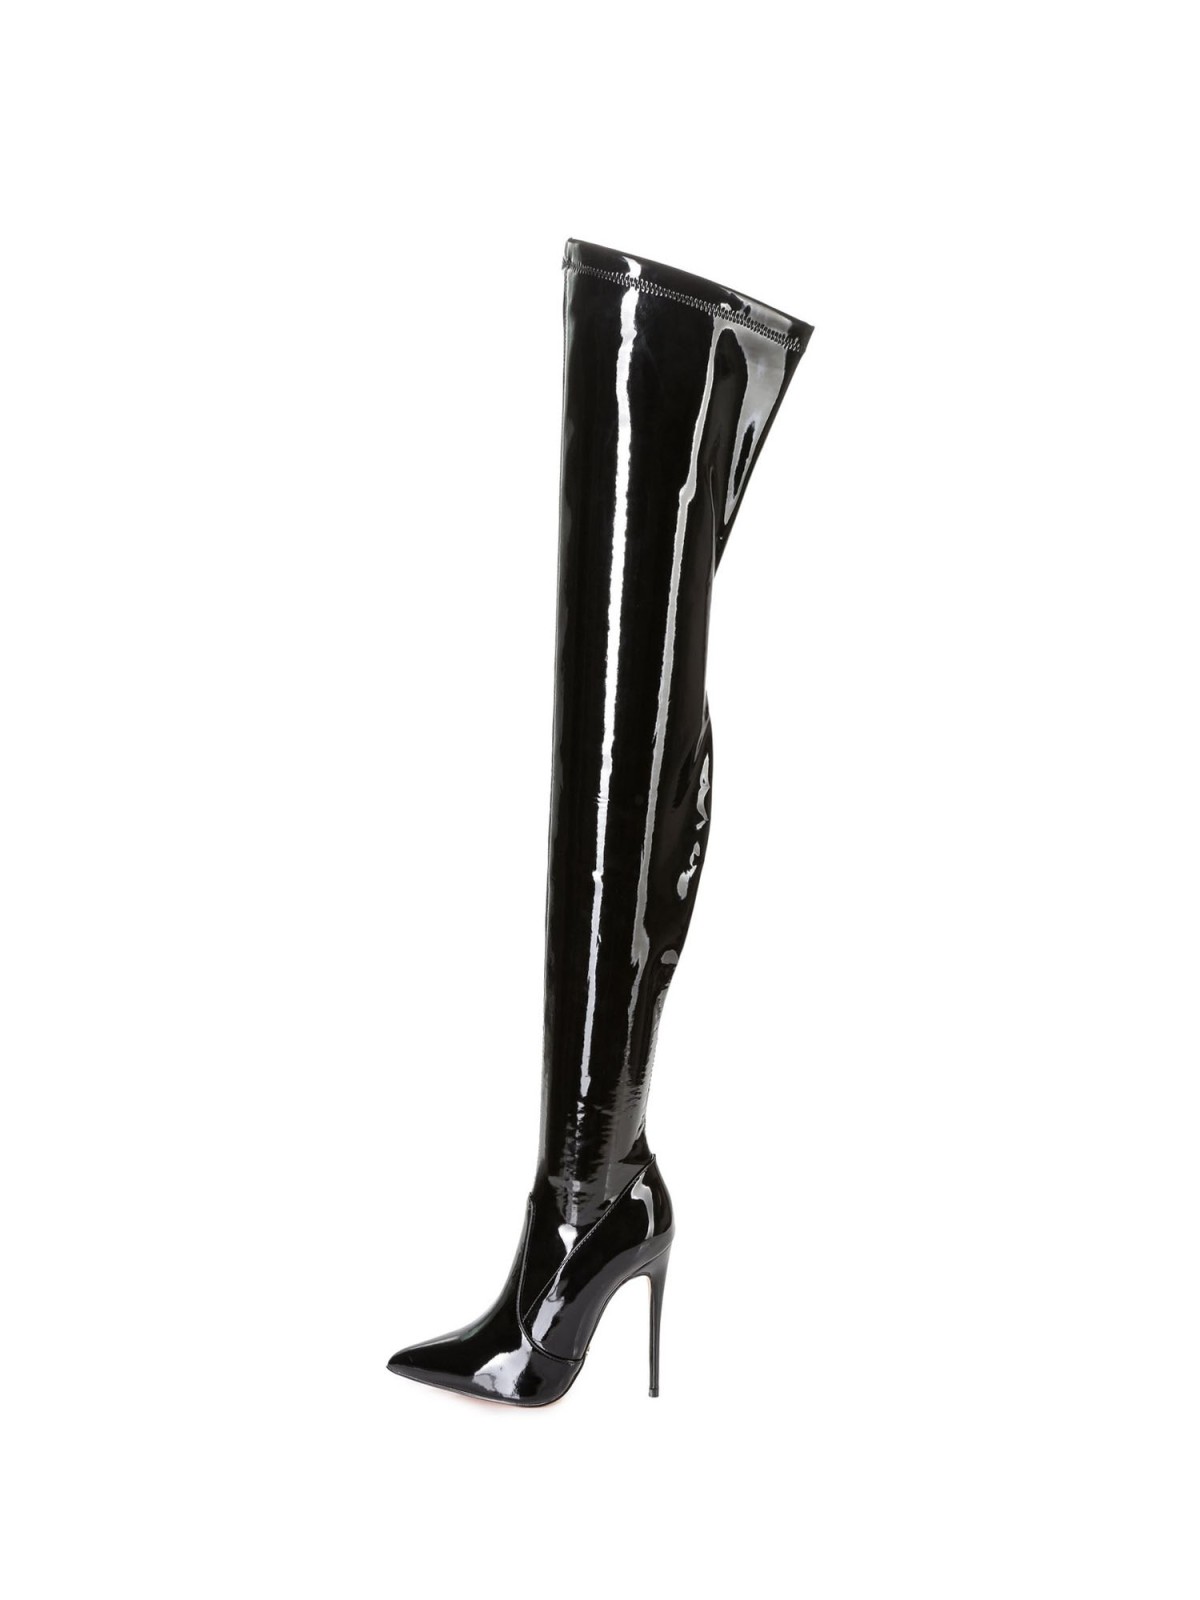 Giaro ARABELLA black shiny over-the-knee boots on high heel